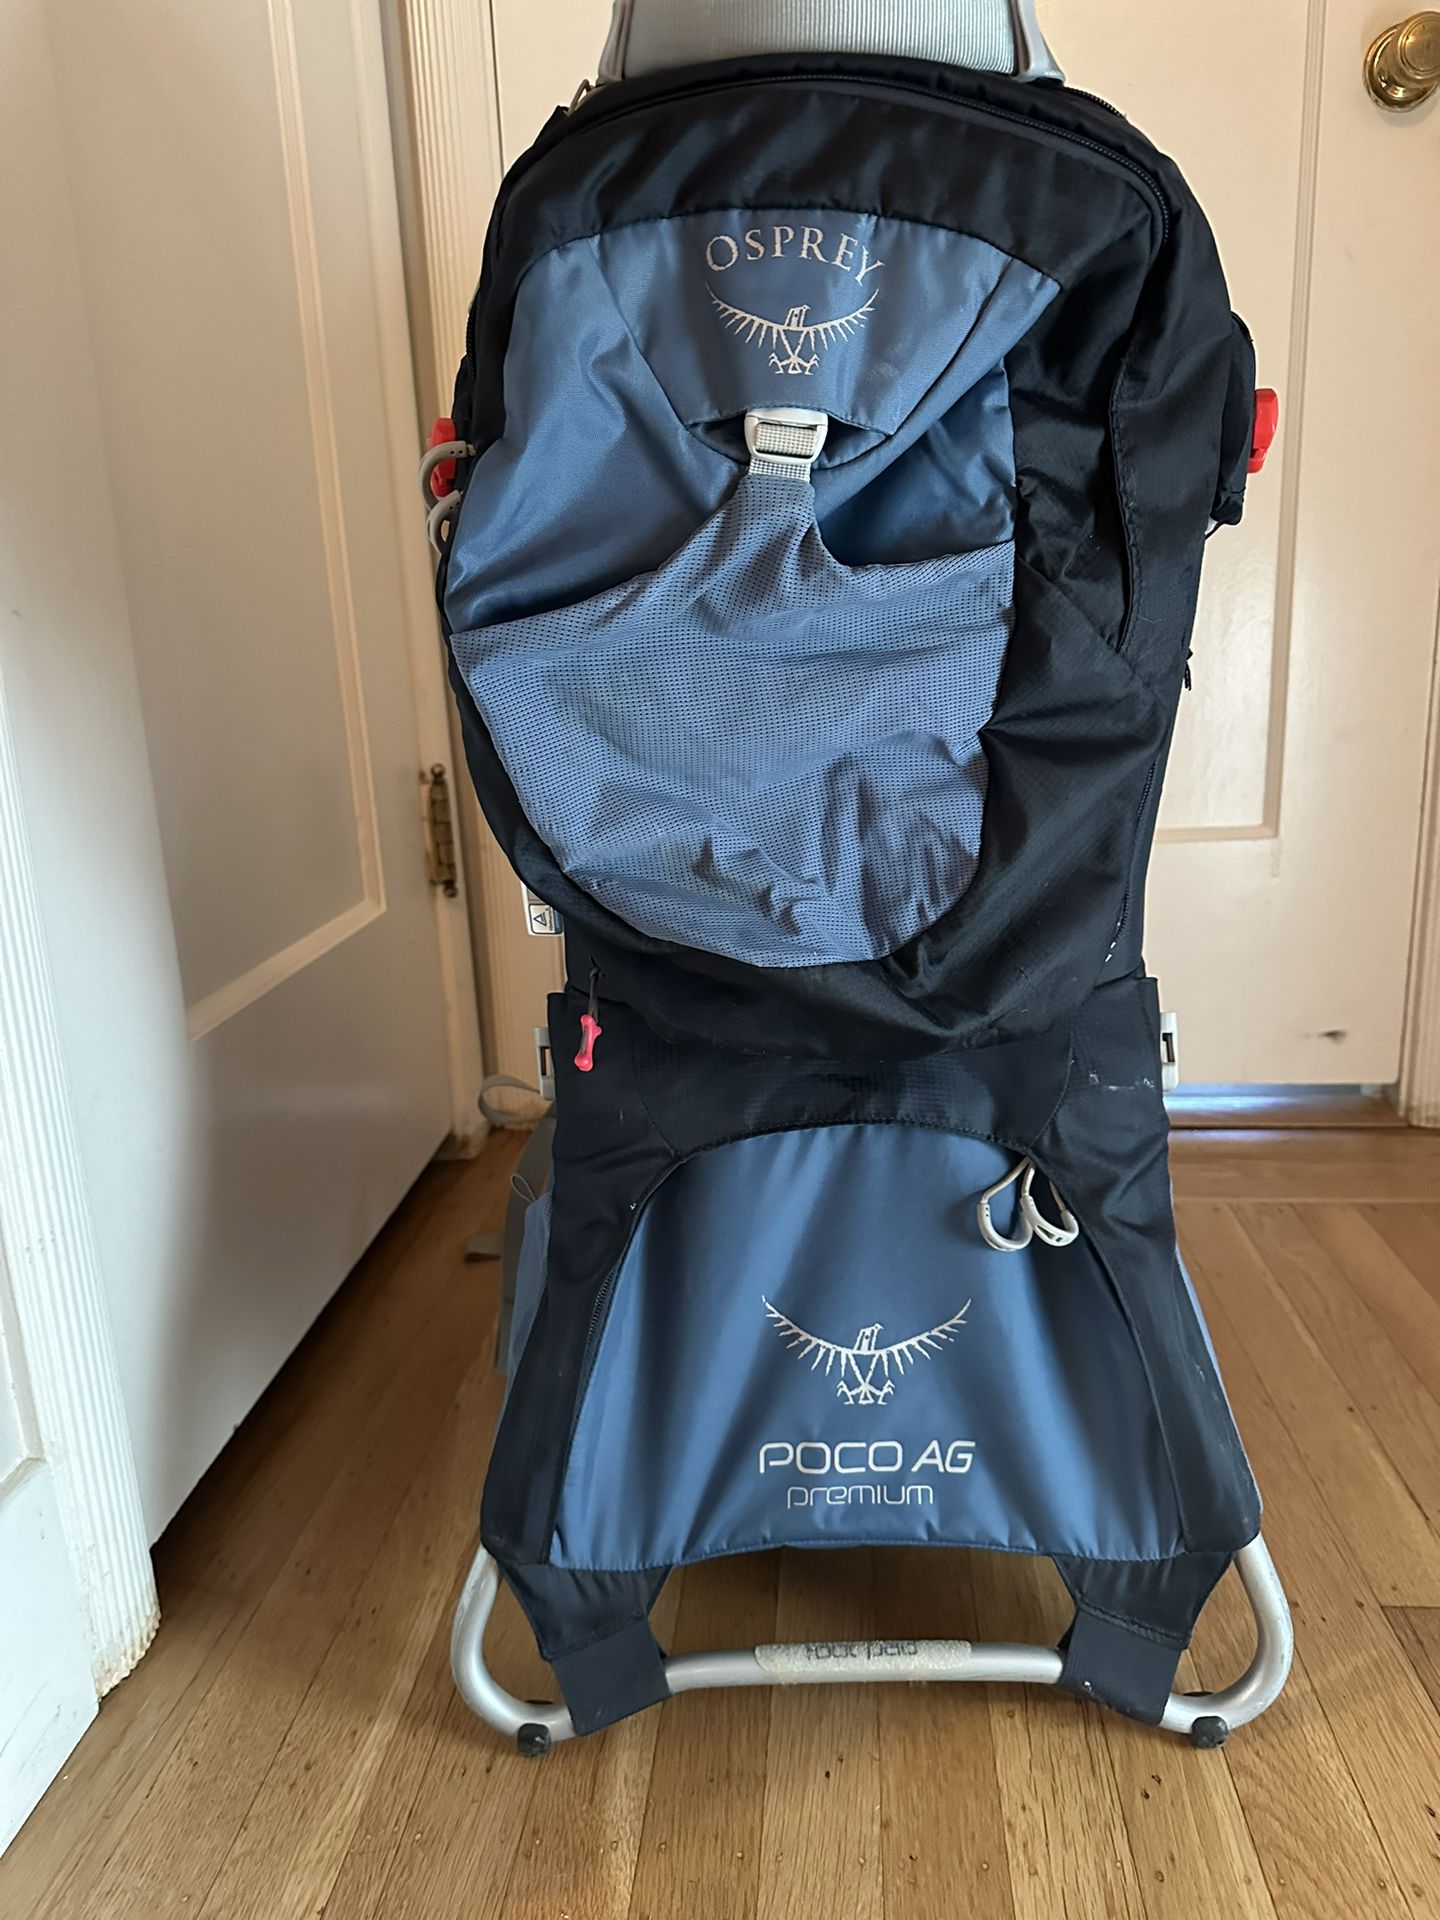 Osprey Poco AG Premium Child Carrier Backpack